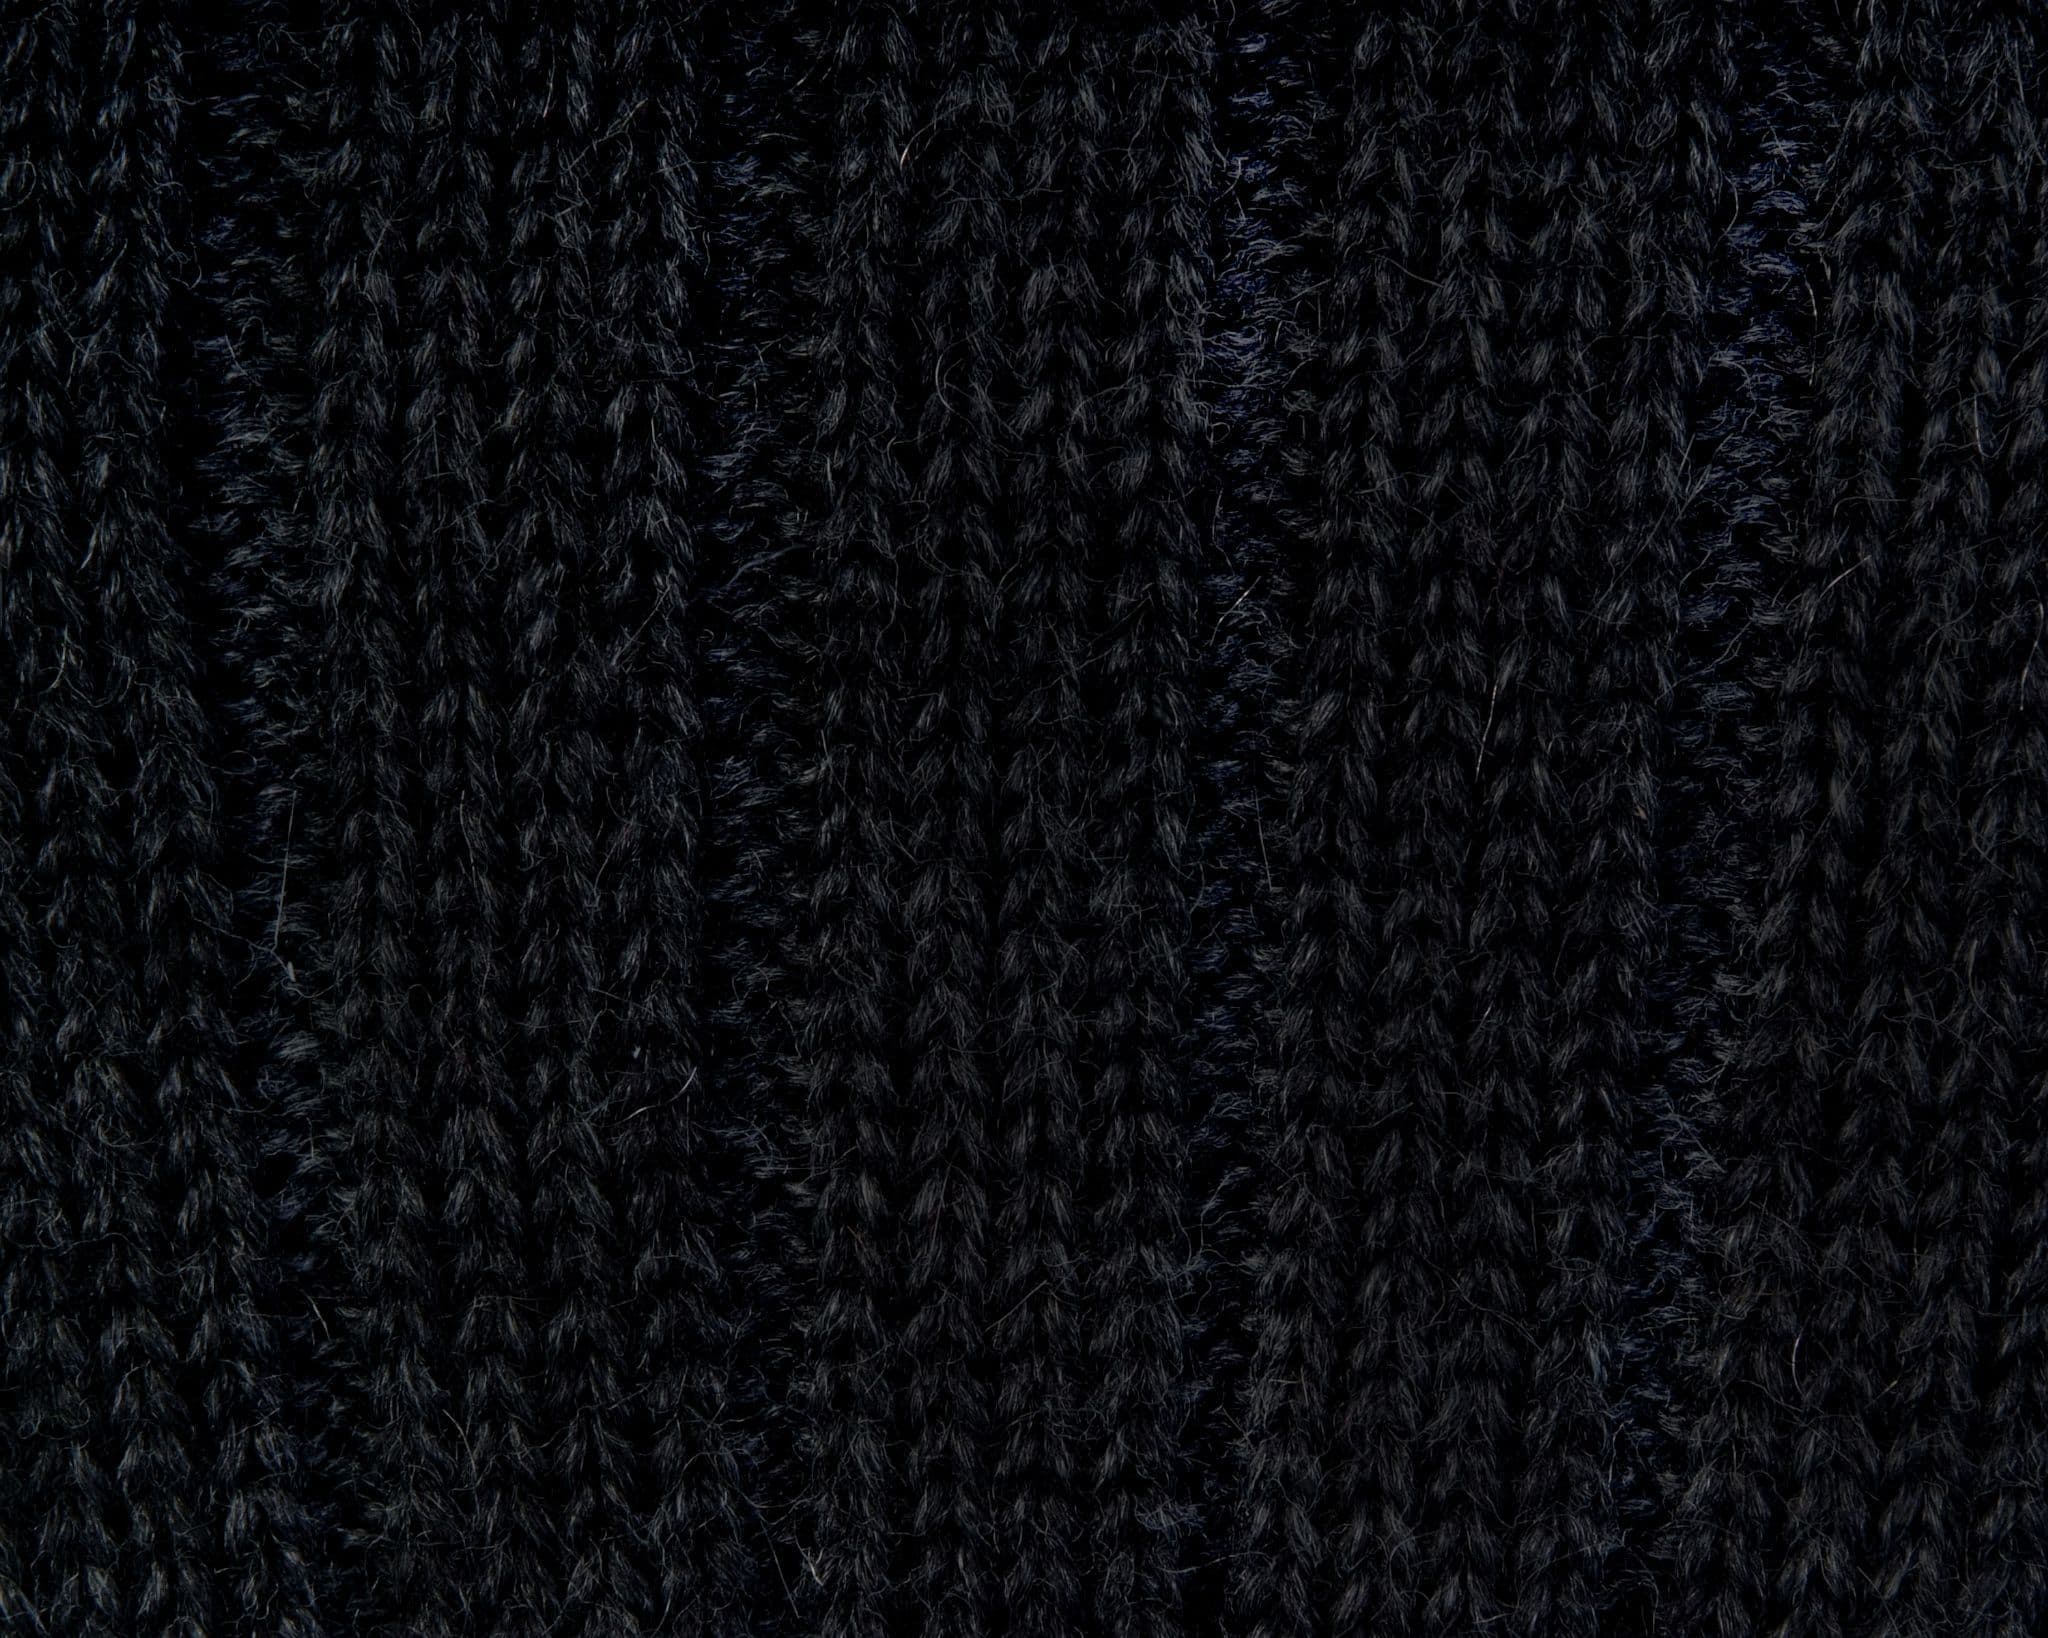 House Of Cheviot Men's Skye Cable Rib Sock Kilt Hose - Black